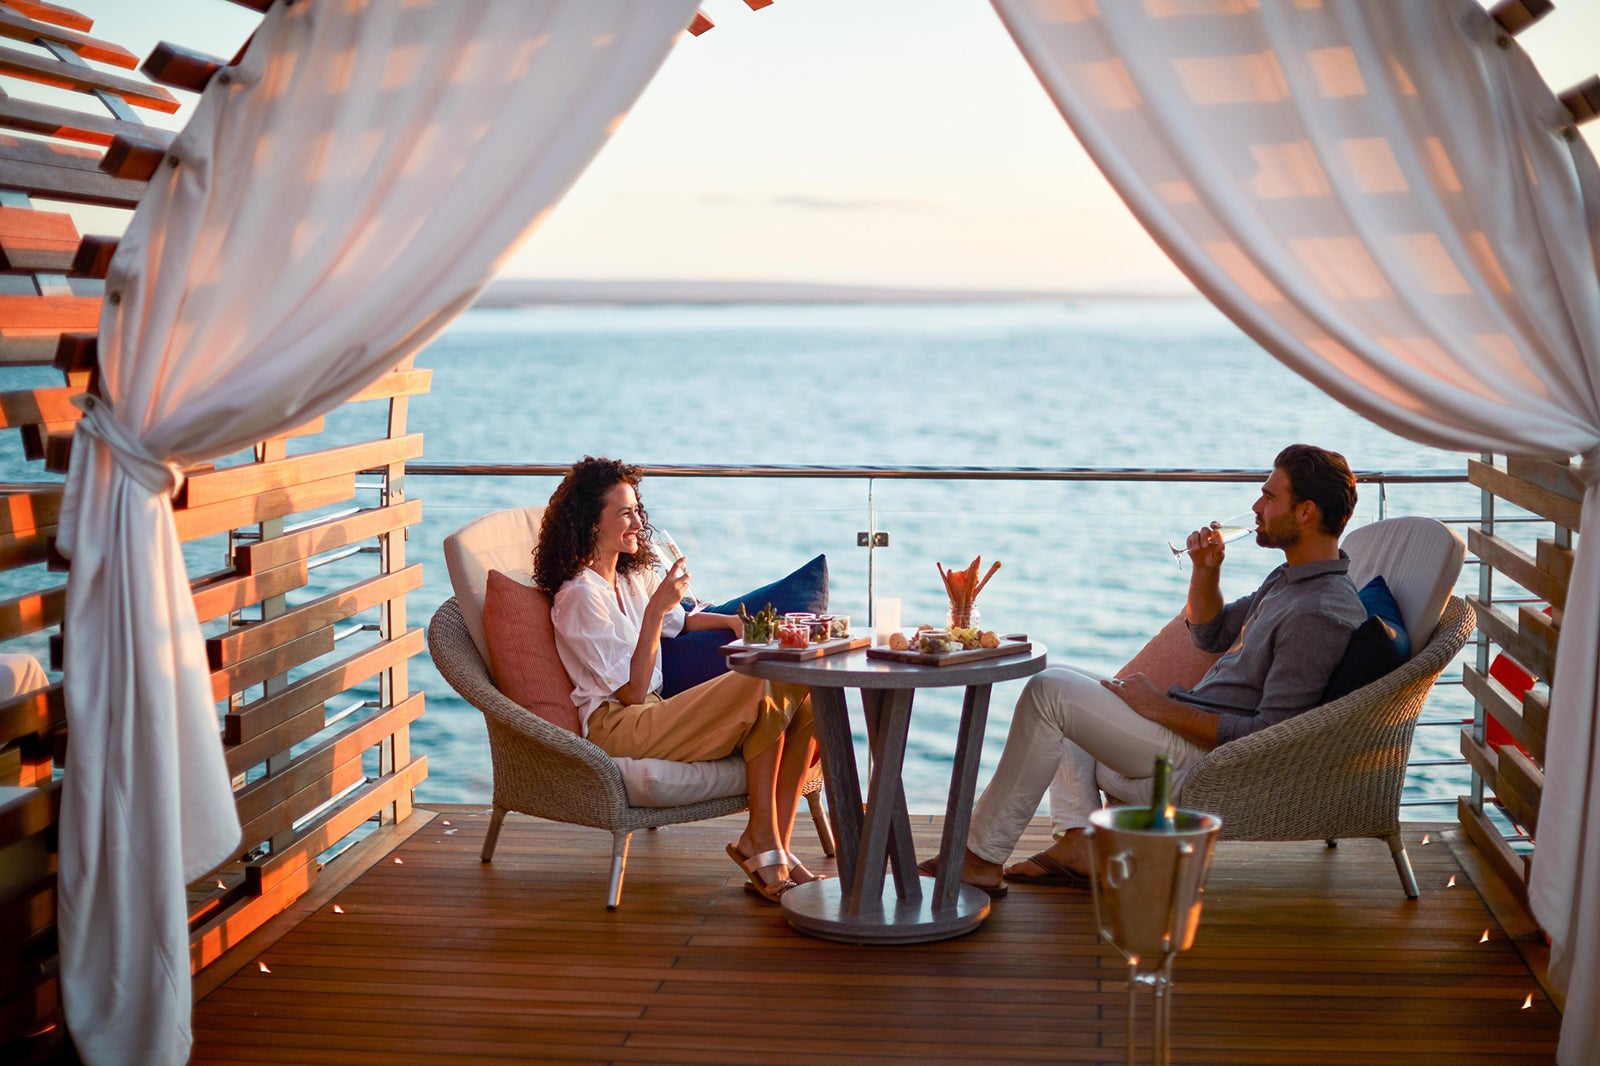 Couple having a meal on a cruise ship balcony